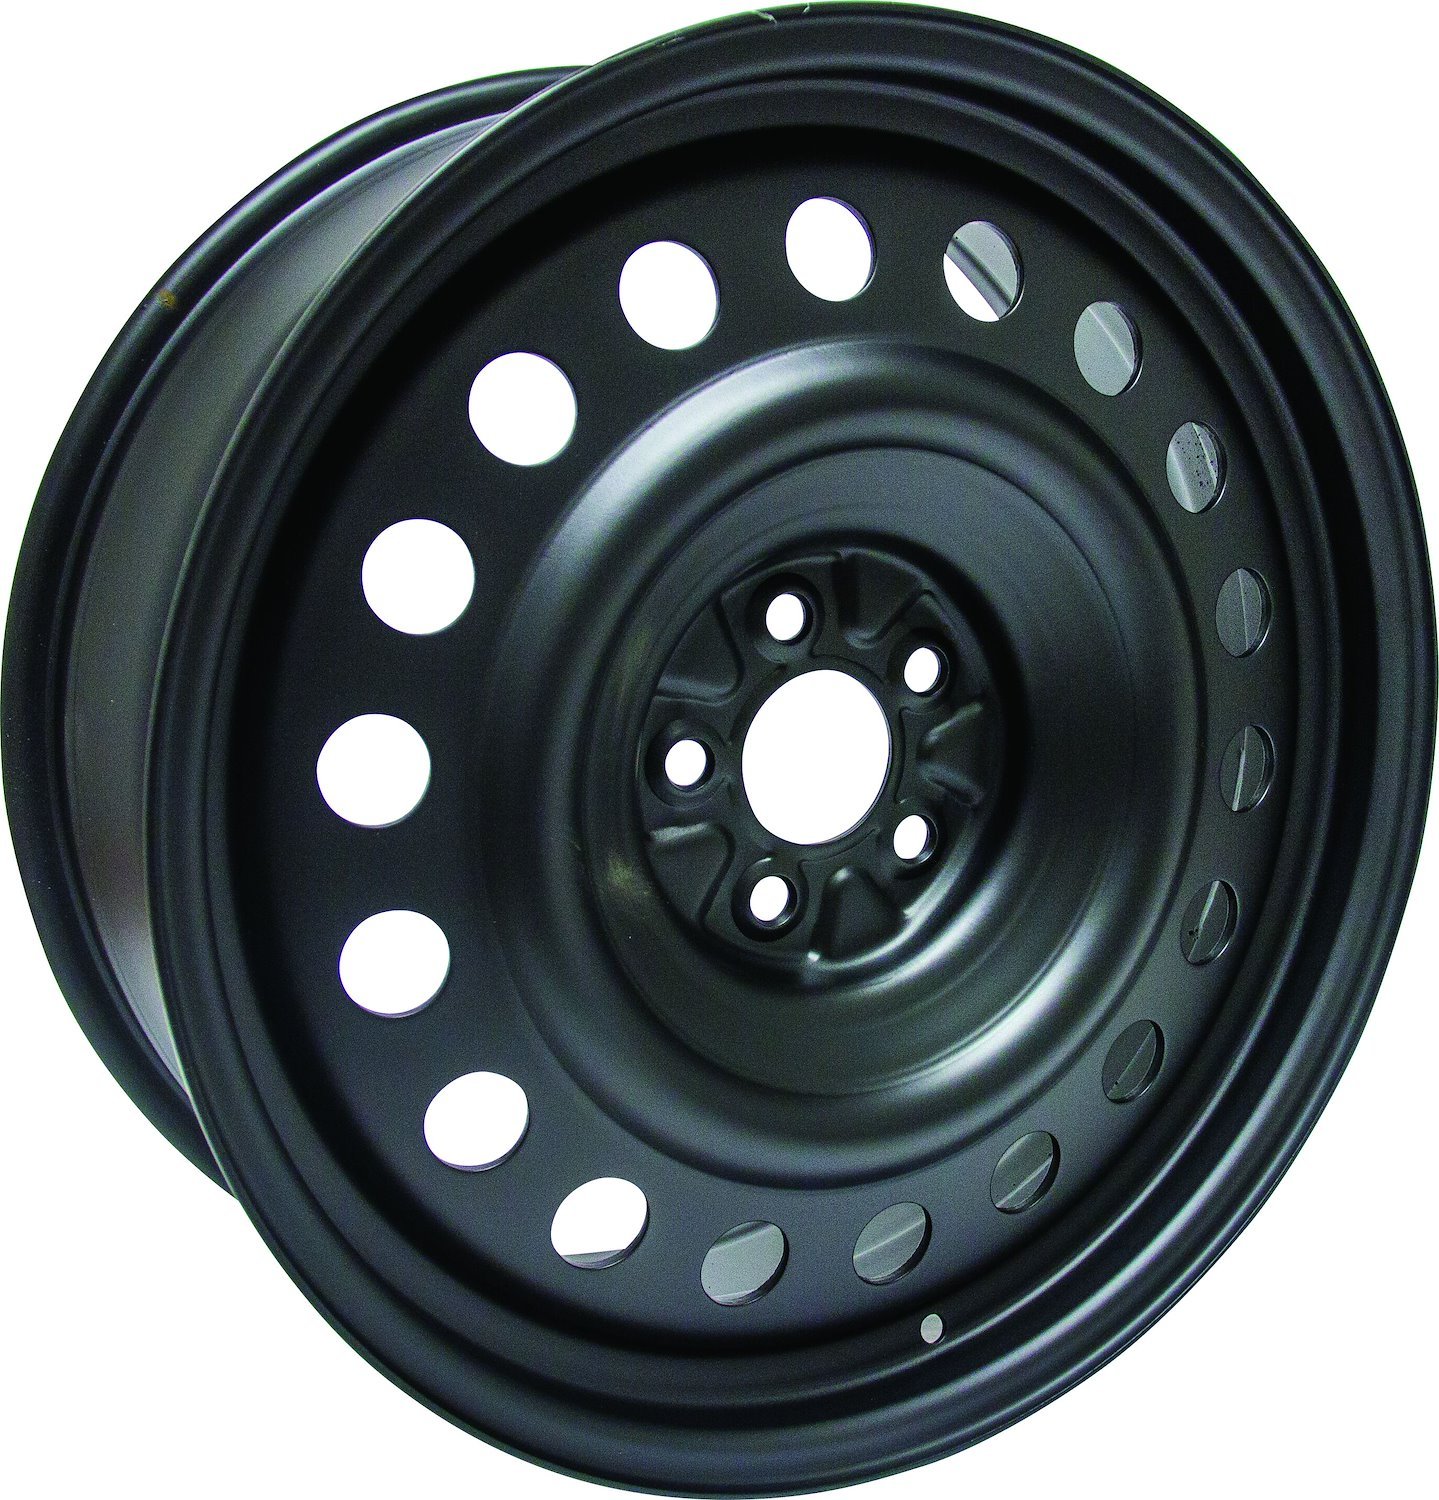 X49518 Steel Wheel [Size: 19" x 7.50"] Black Finish